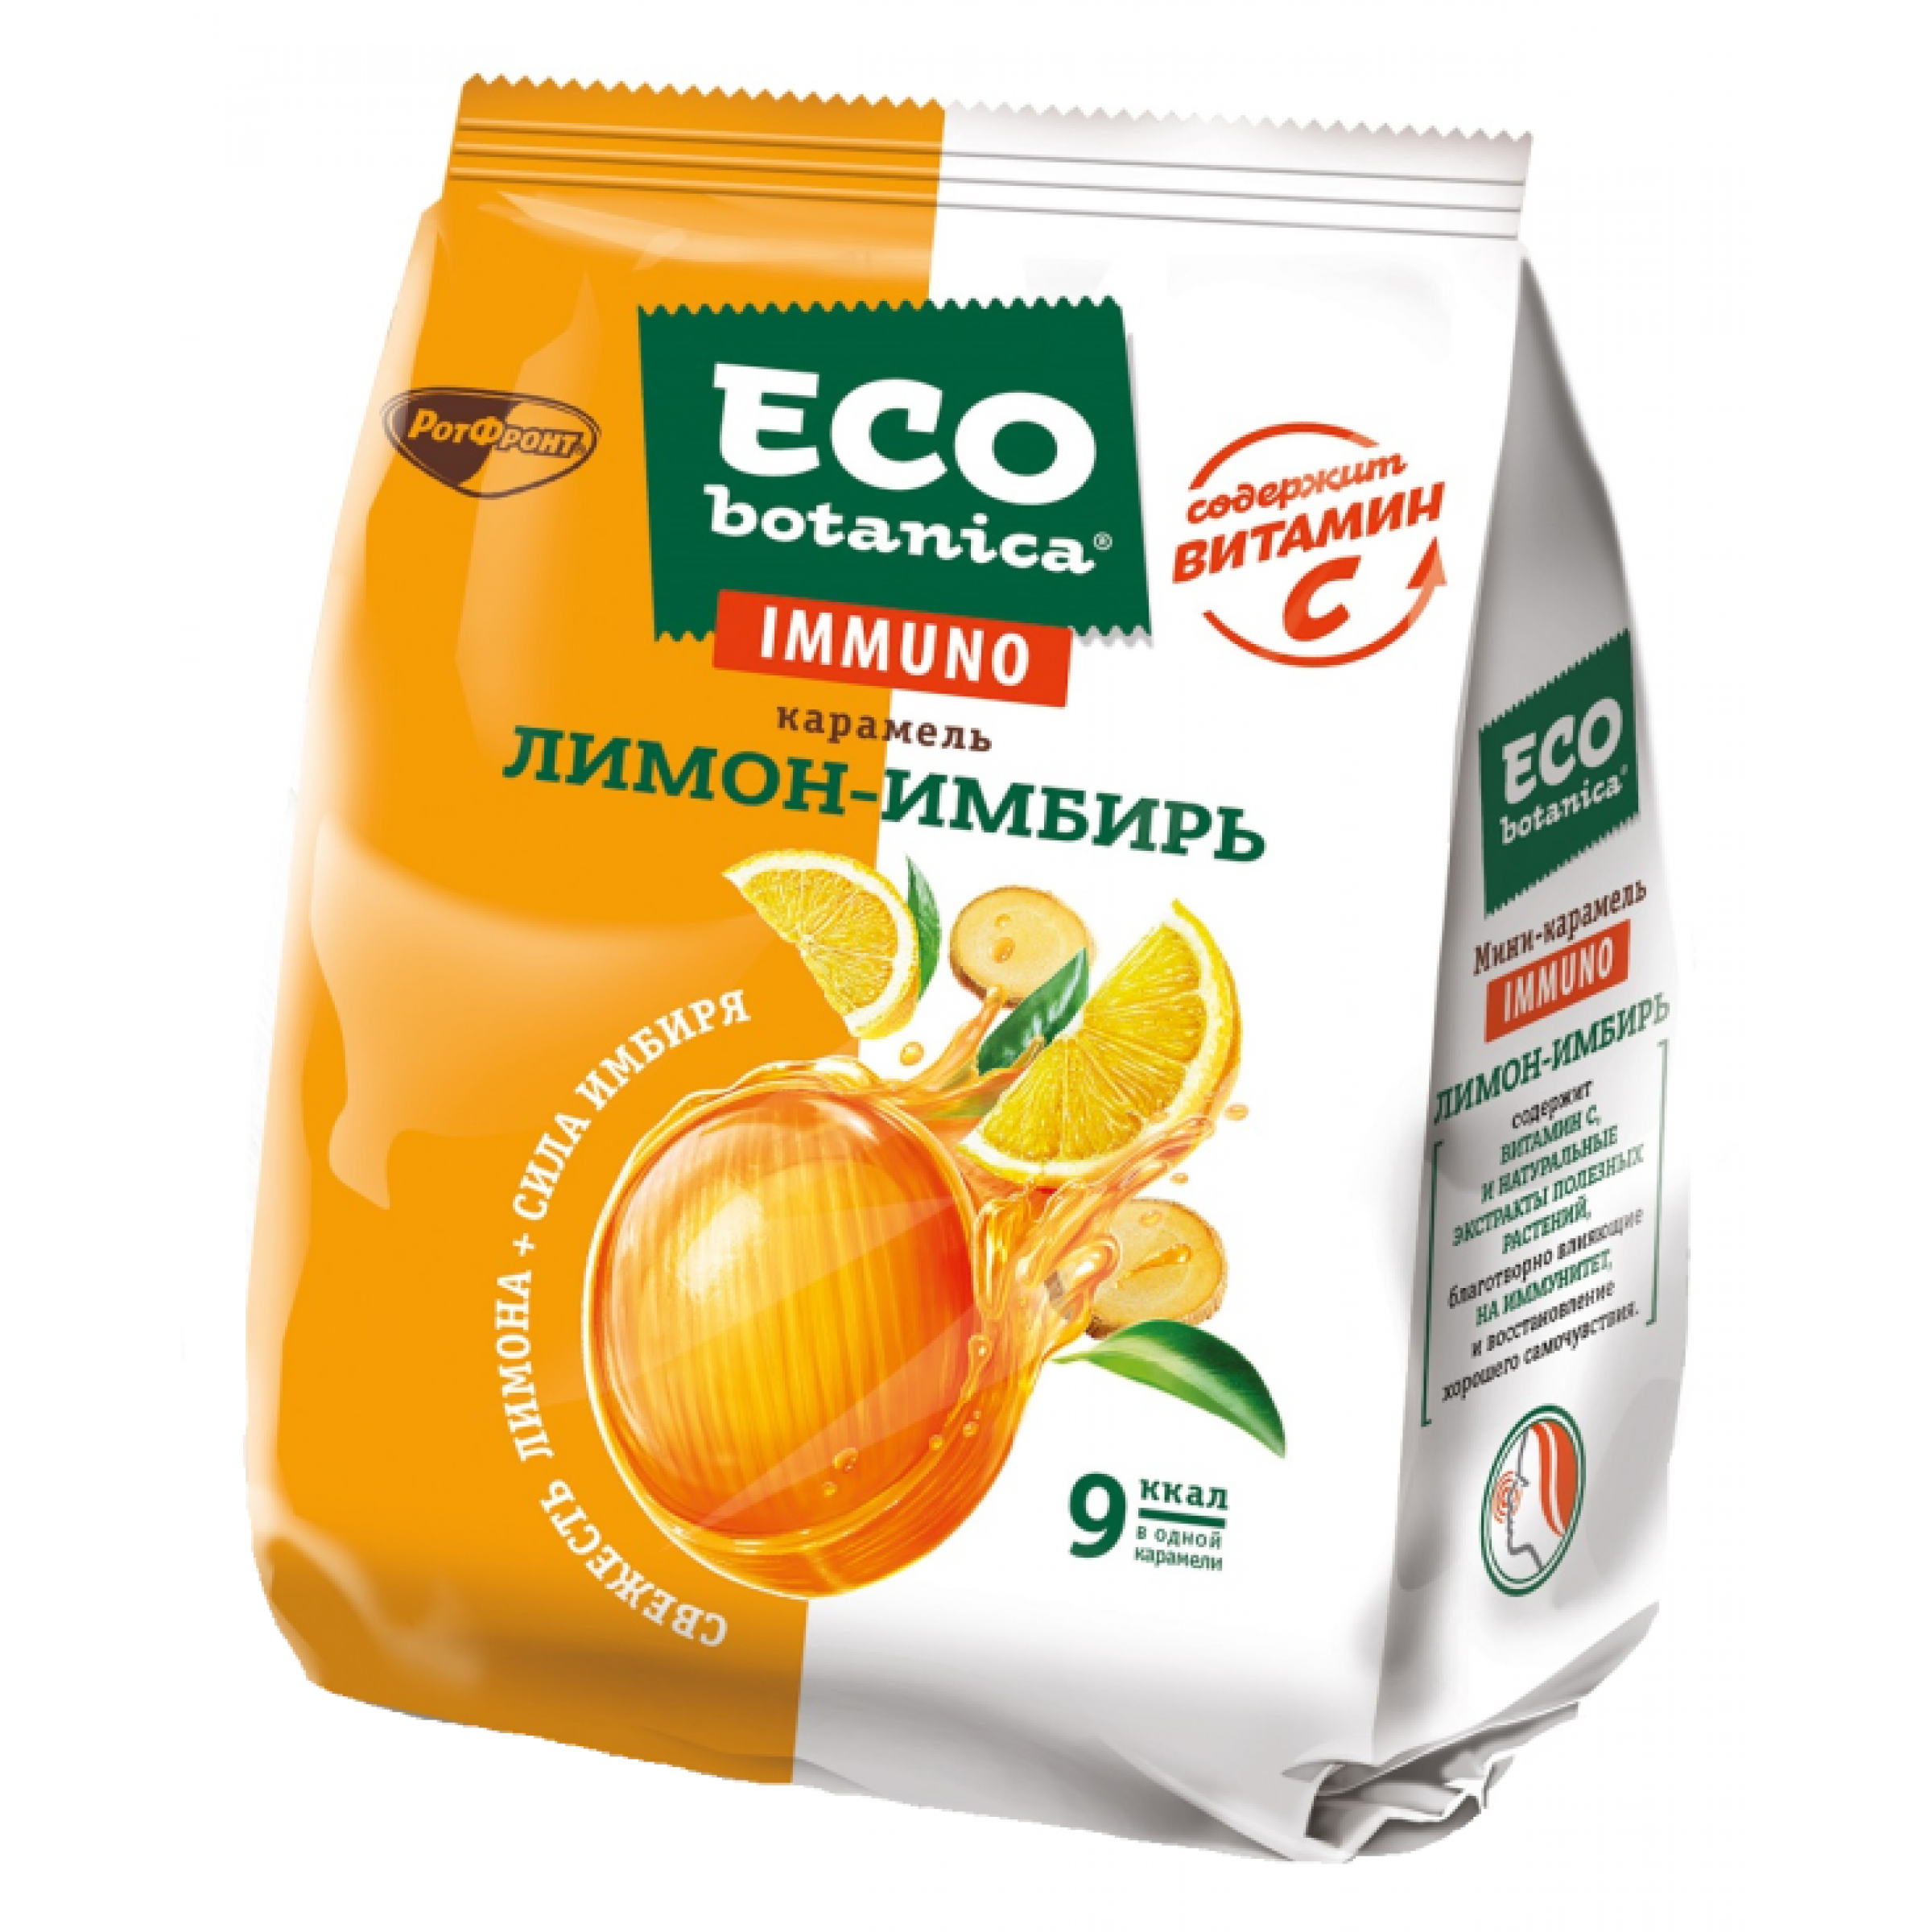 Карамель Eco Botanica Immuno Лимон - имбирь 100 г